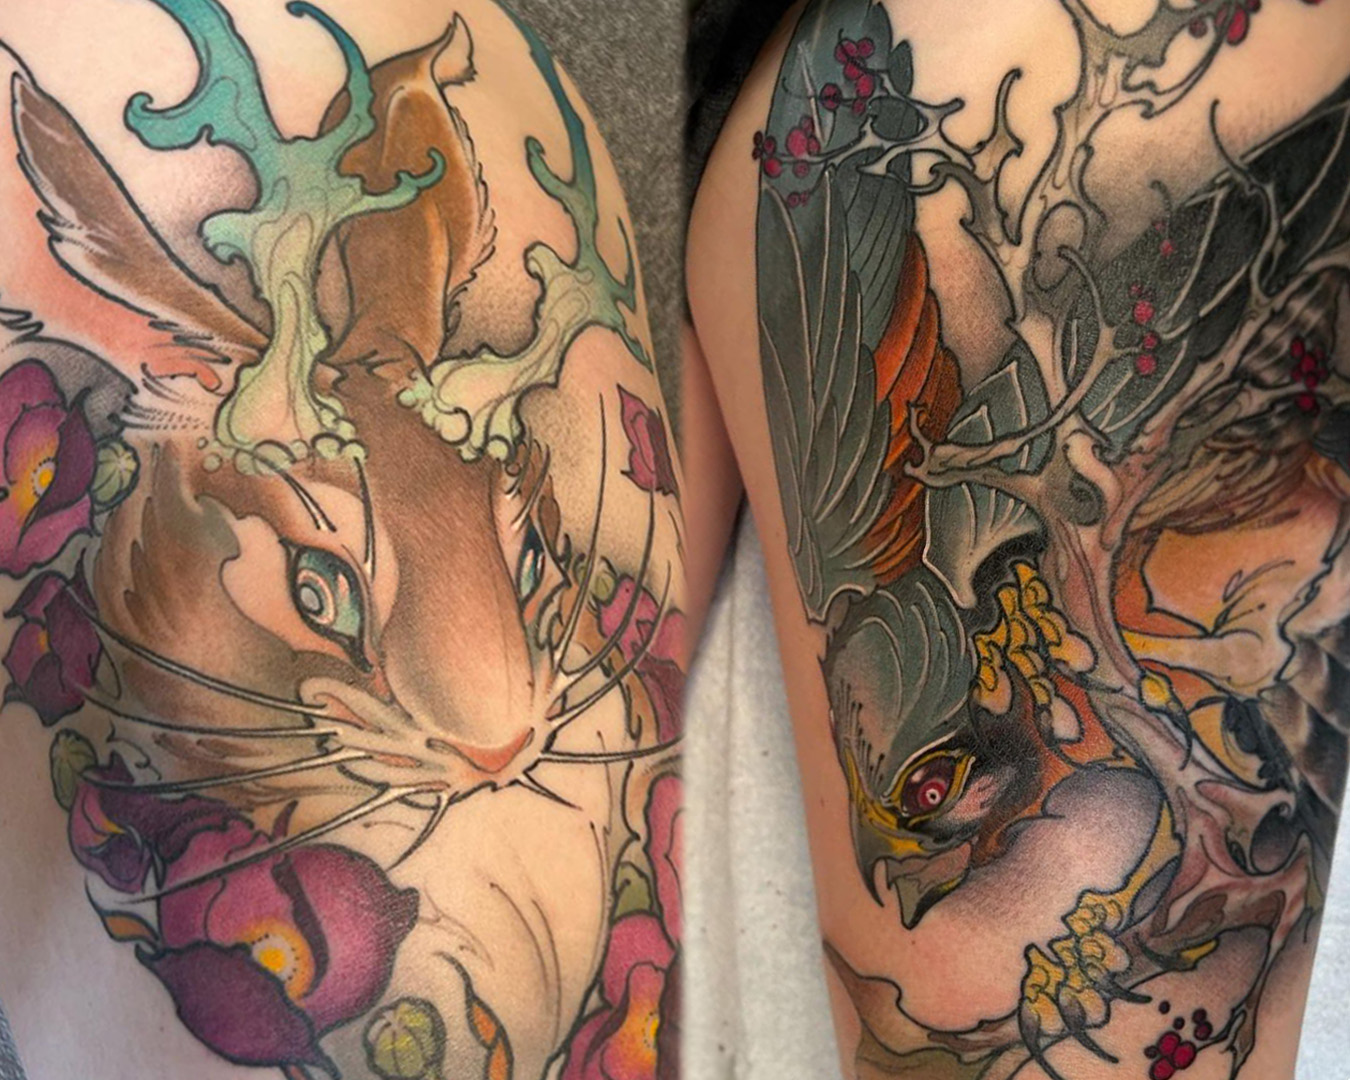 Rabbit with Horns and Bird Tattoos By Corey Bernhardt